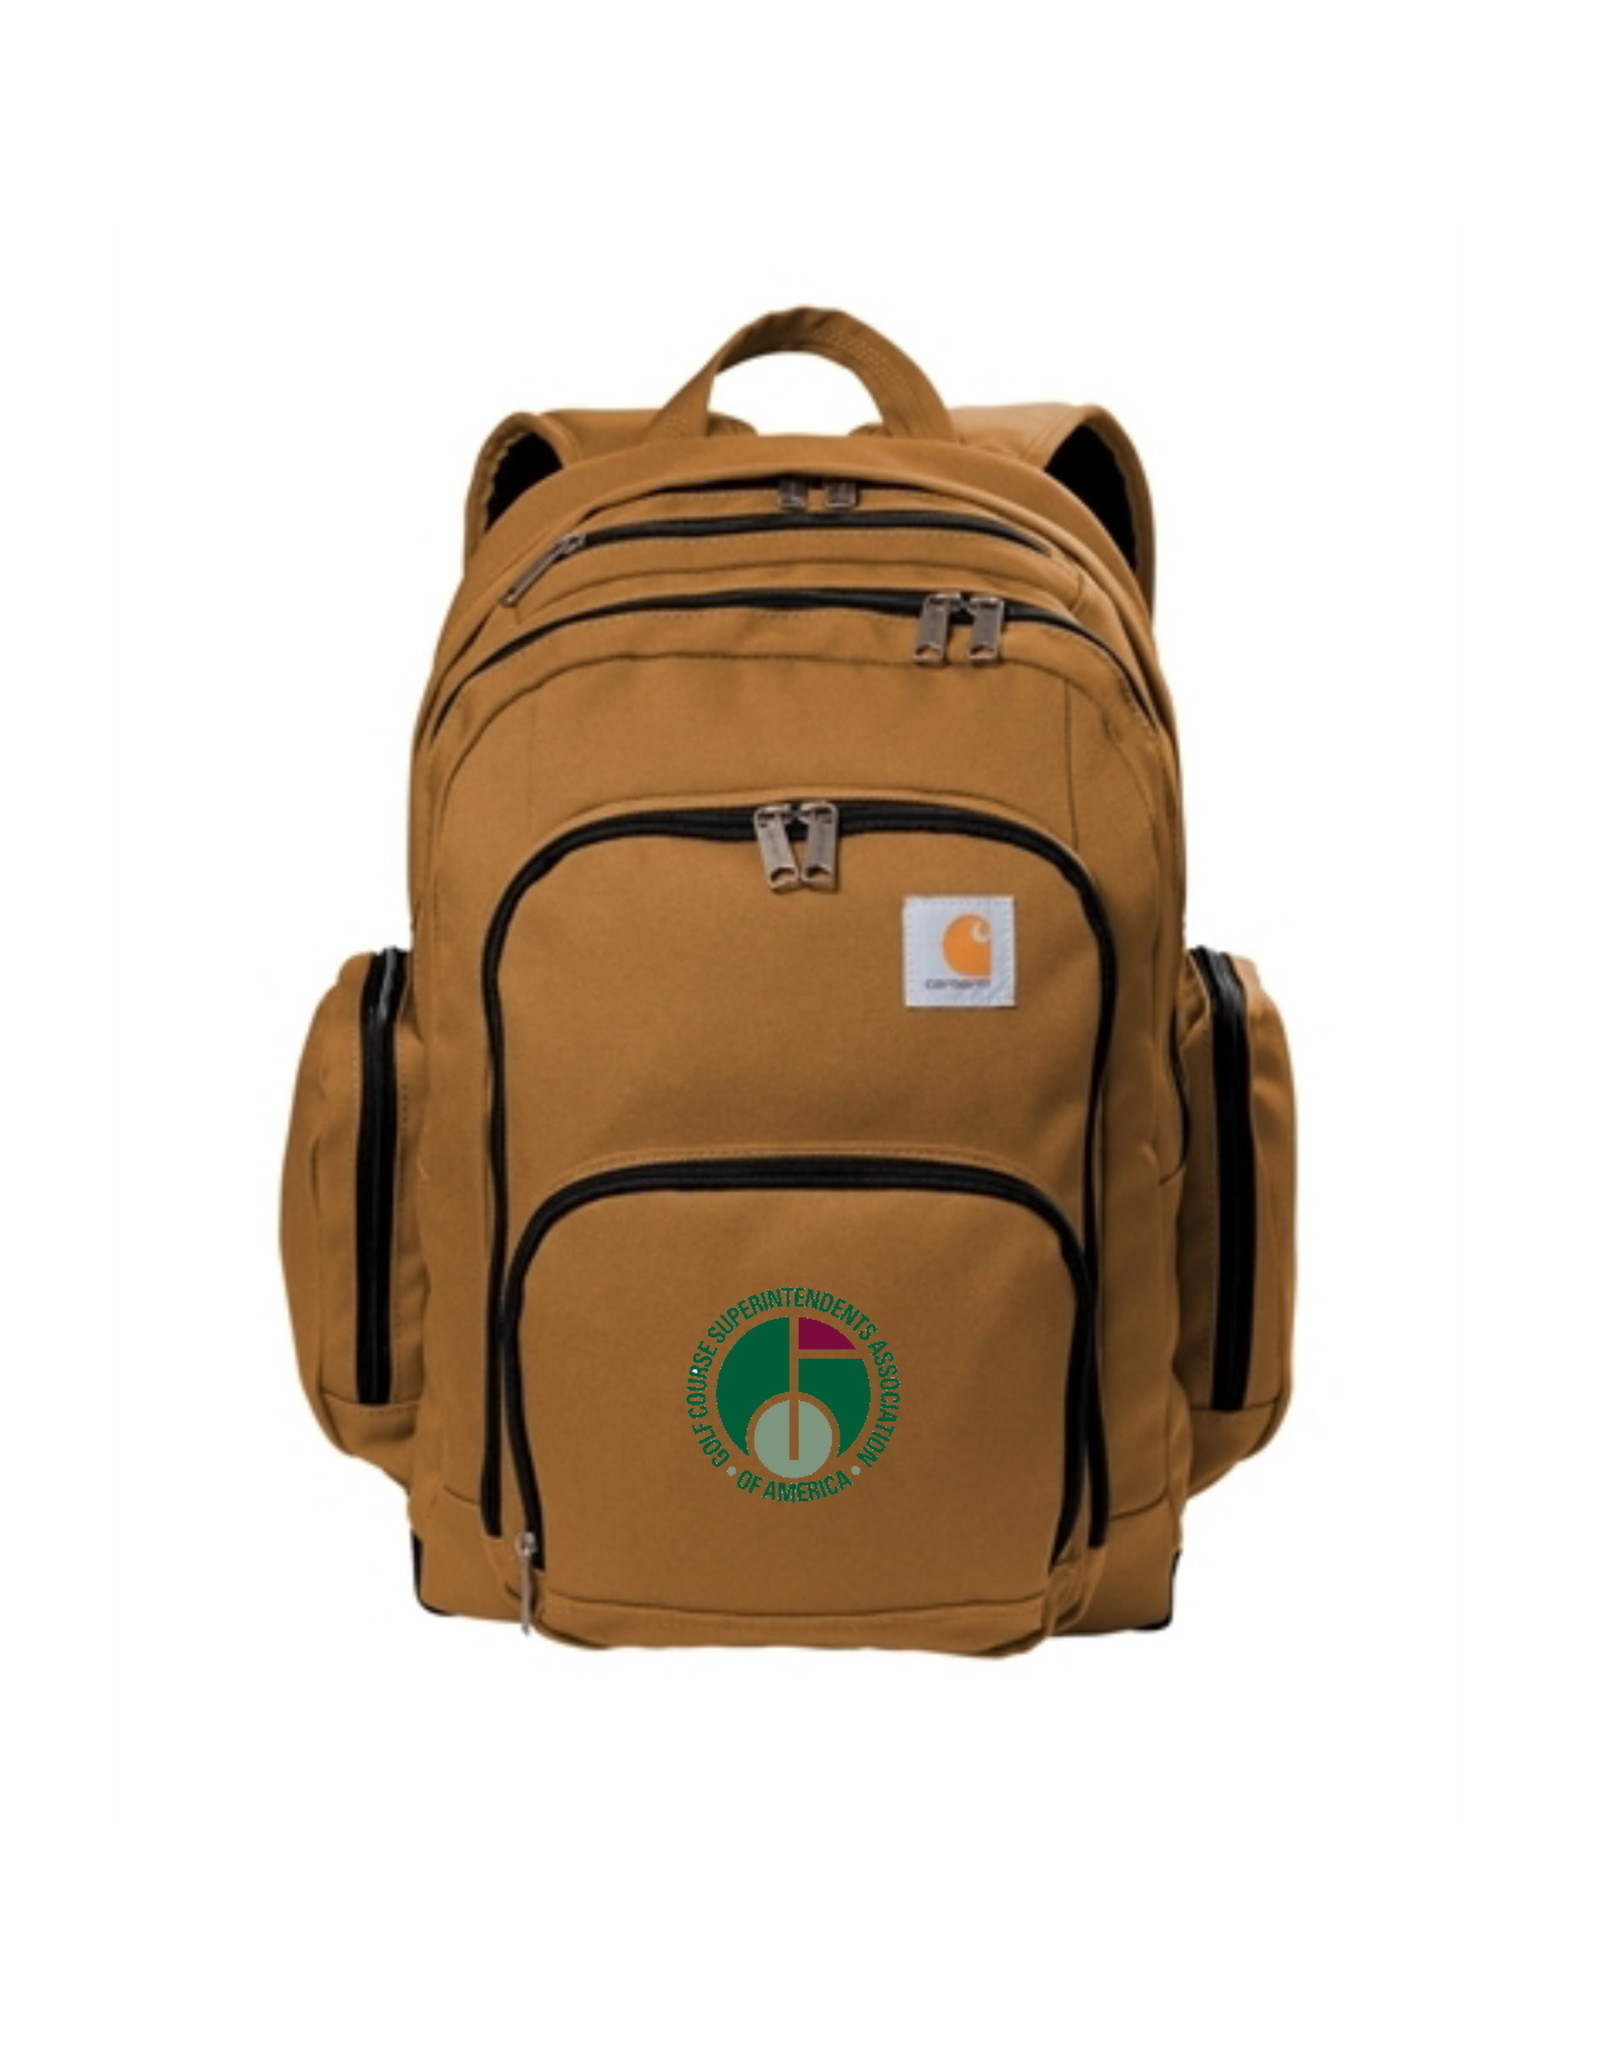 Carhartt Carhartt Foundry Backpack - Brown  Legacy Logo